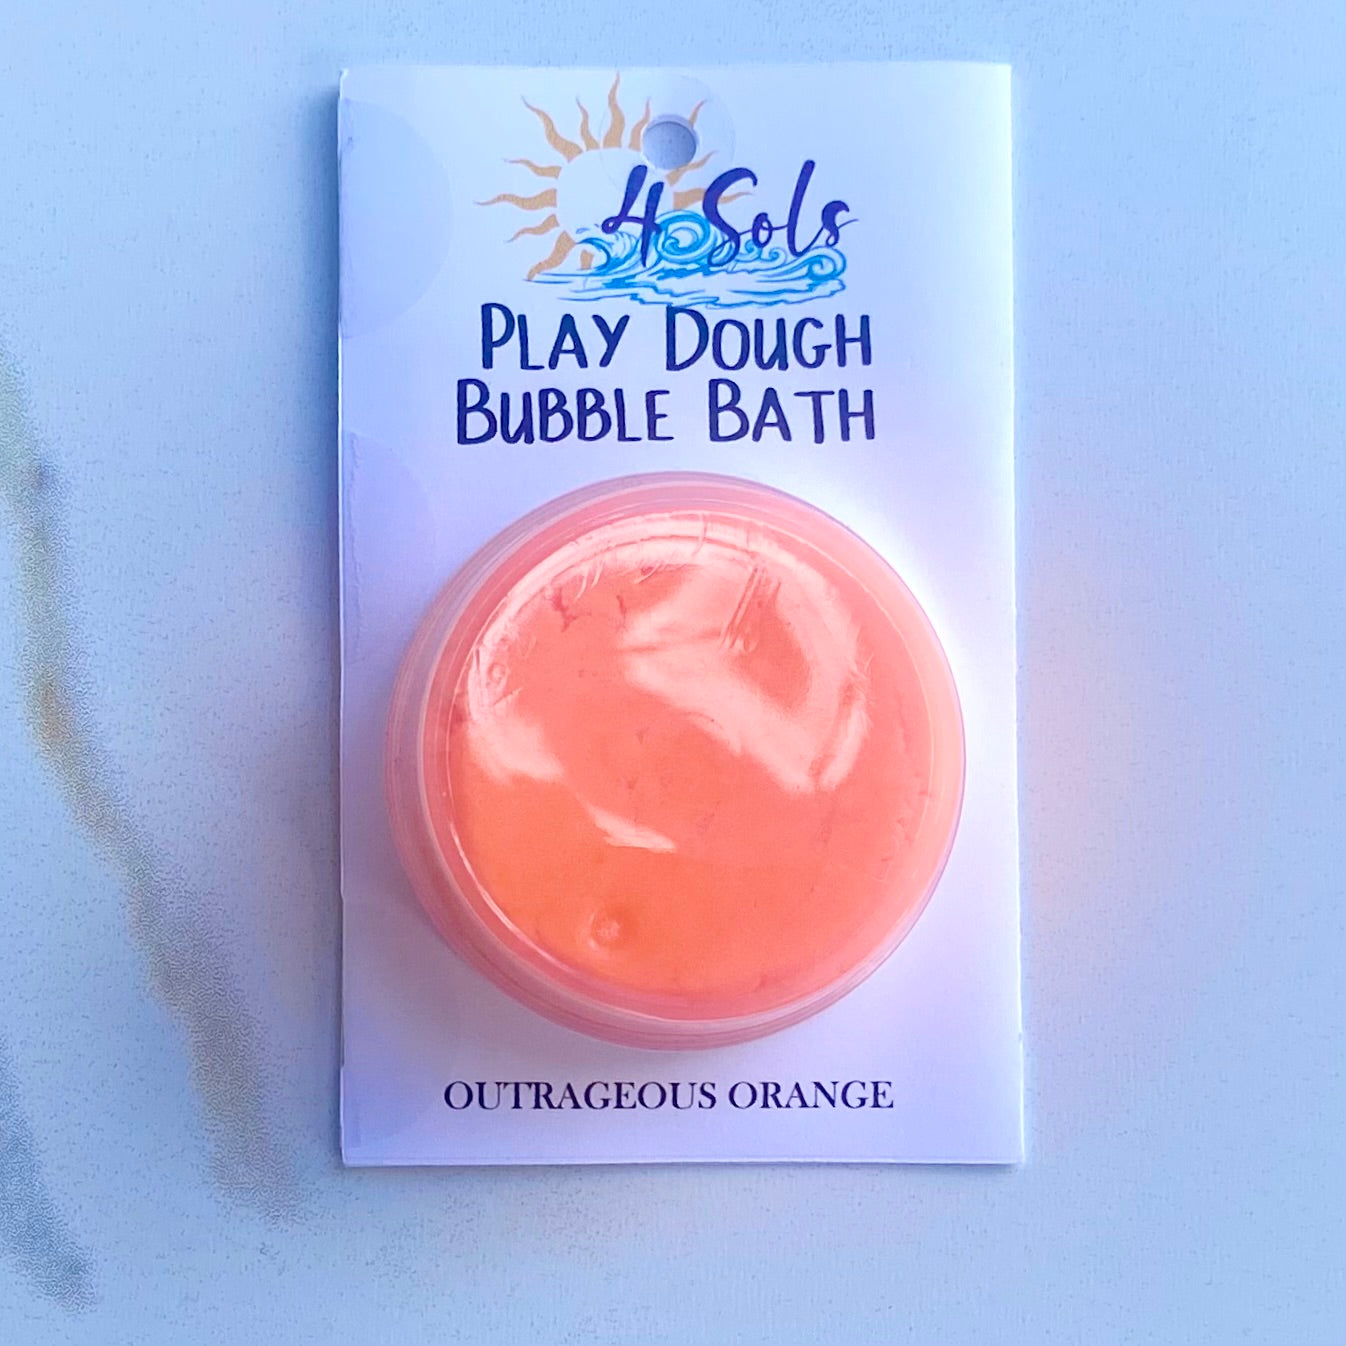 Play Dough Bubble Bath - Orange